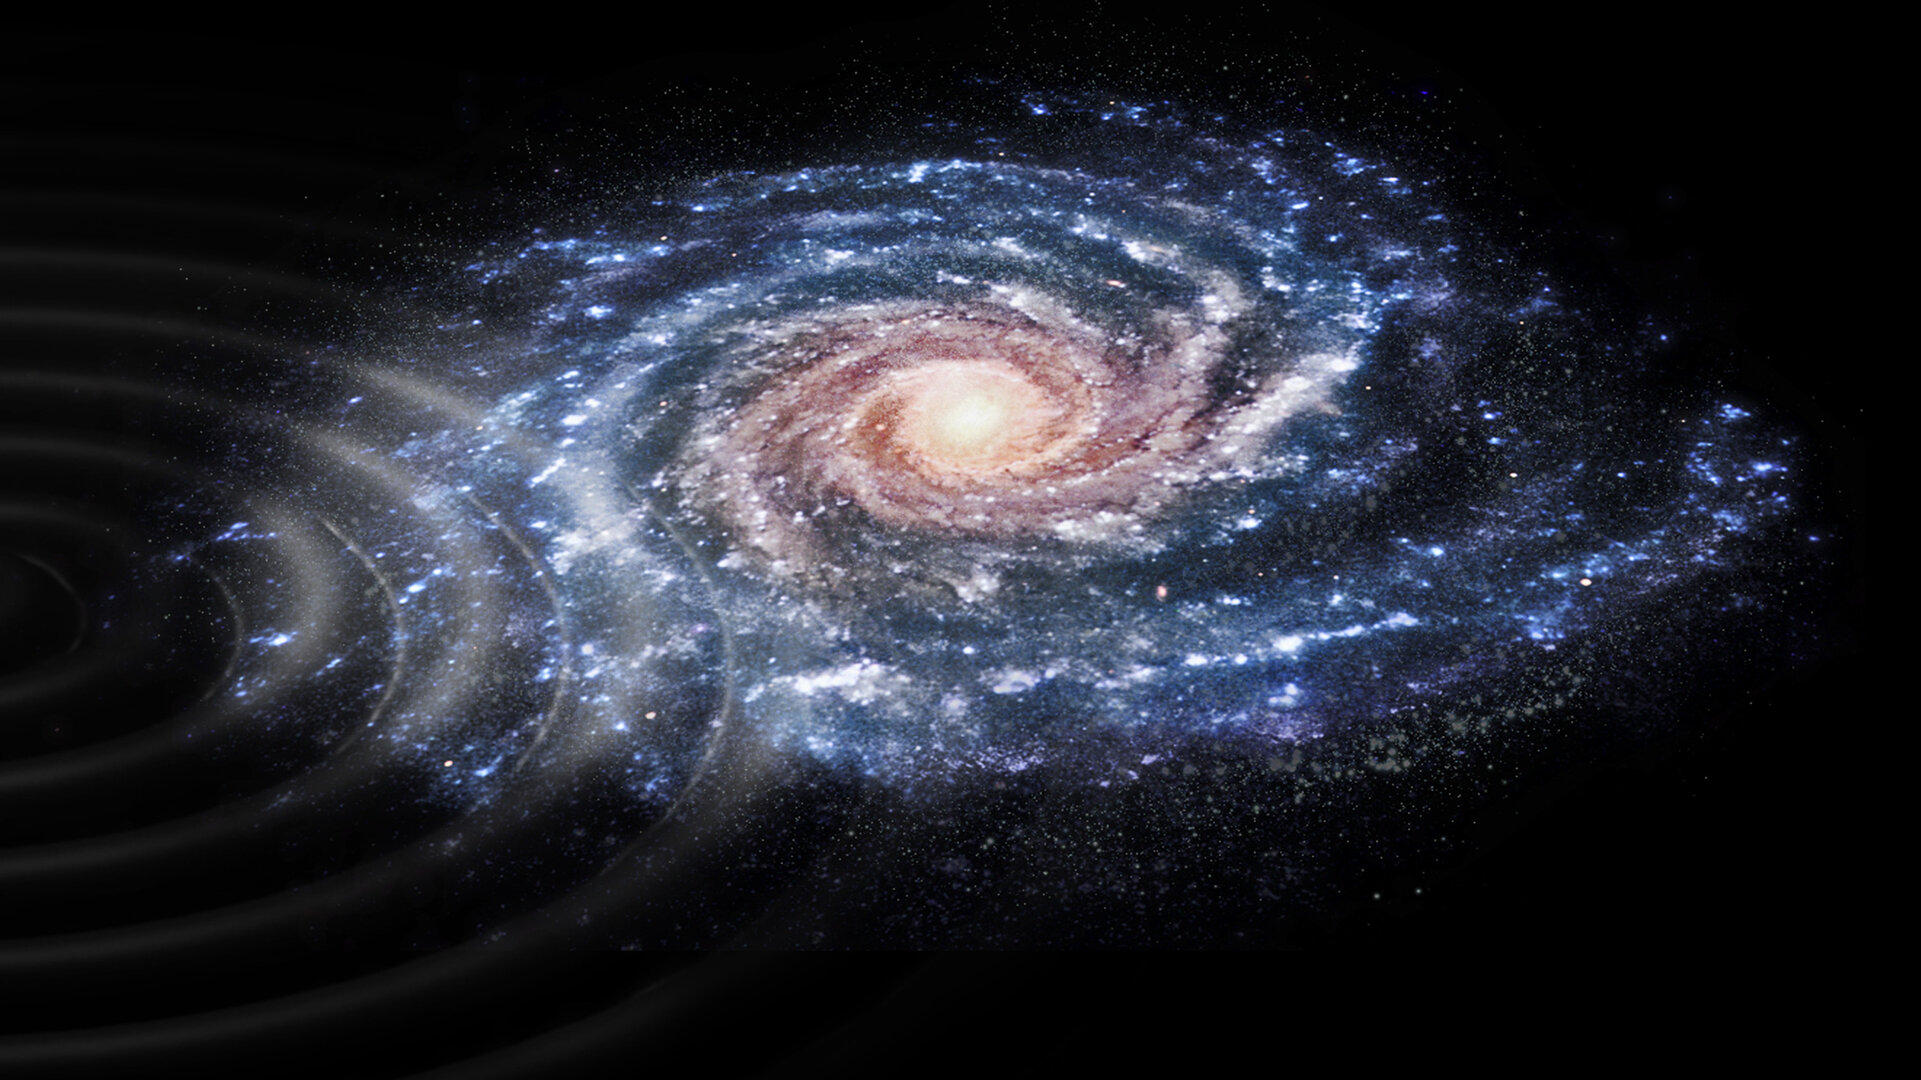 Perturbations in the Milky Way